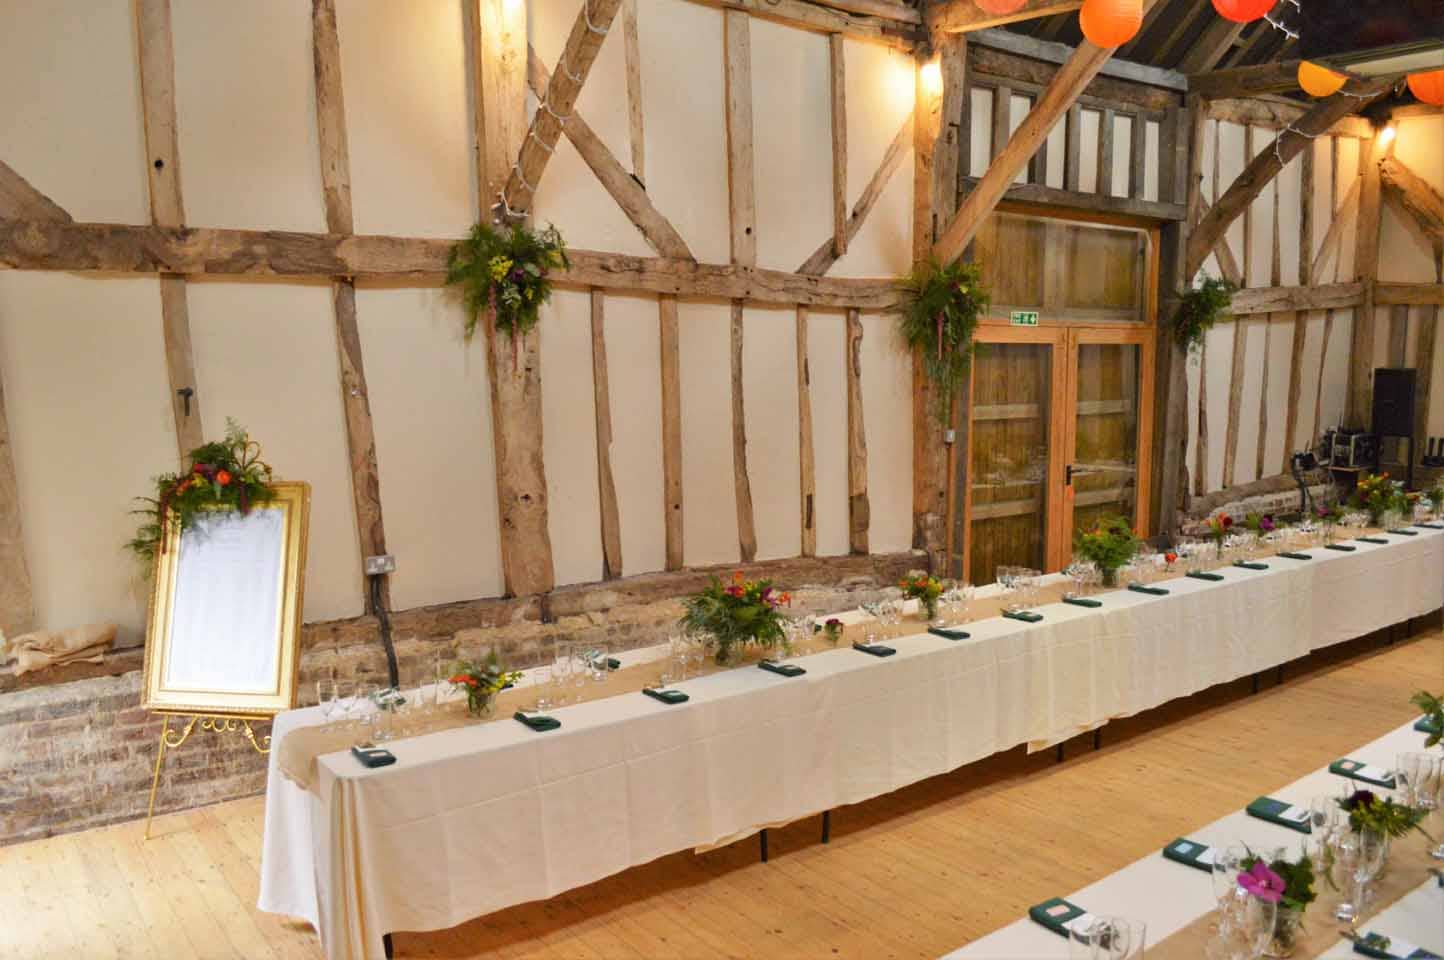 patricks barn wedding set up banquet table